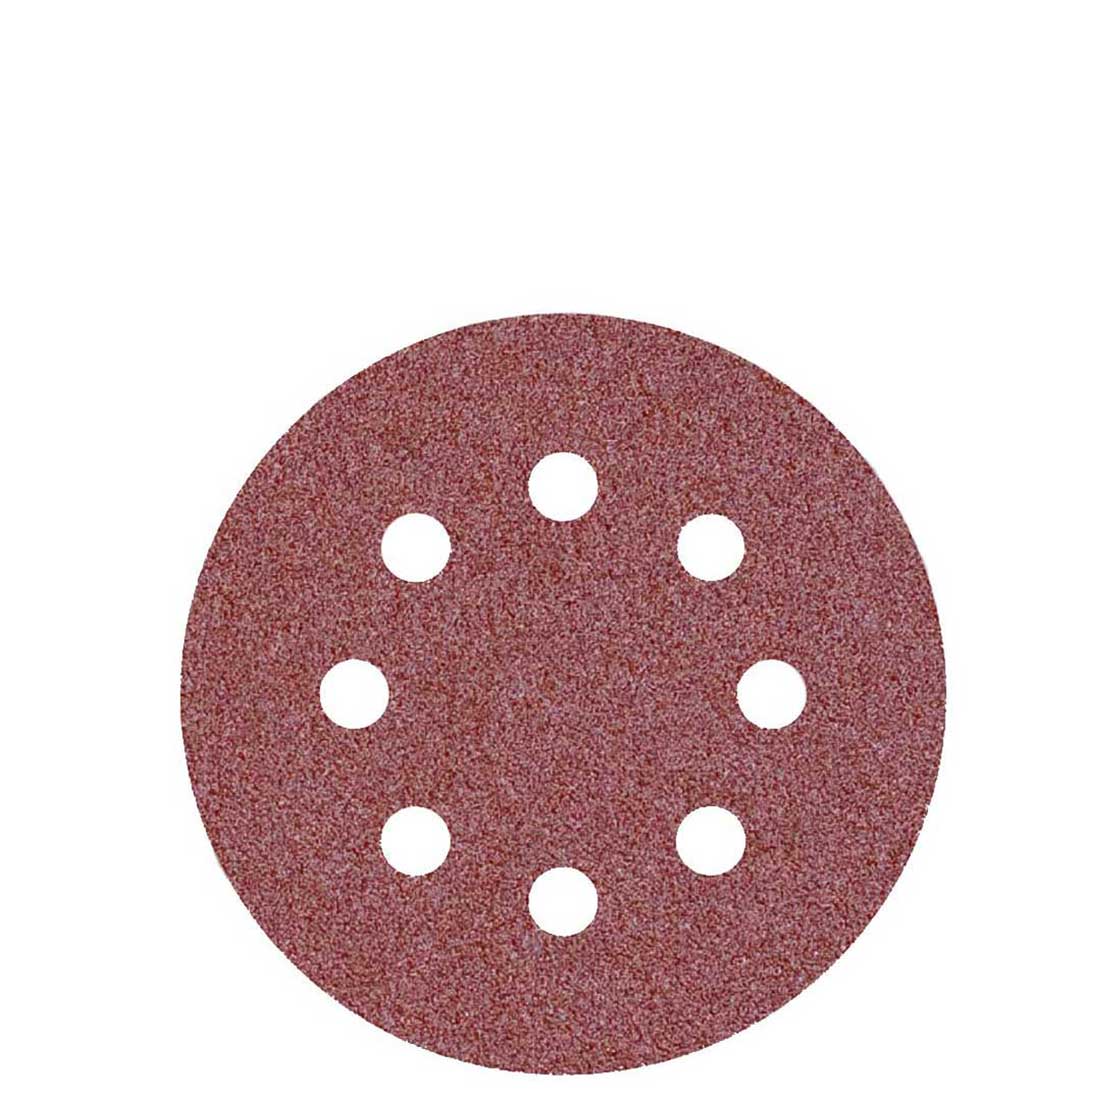 Dischi abrasivi velcrati MioTools per levigatrici rotorbitali, G24–240, Ø 115 mm / 8 fori / corindone normale